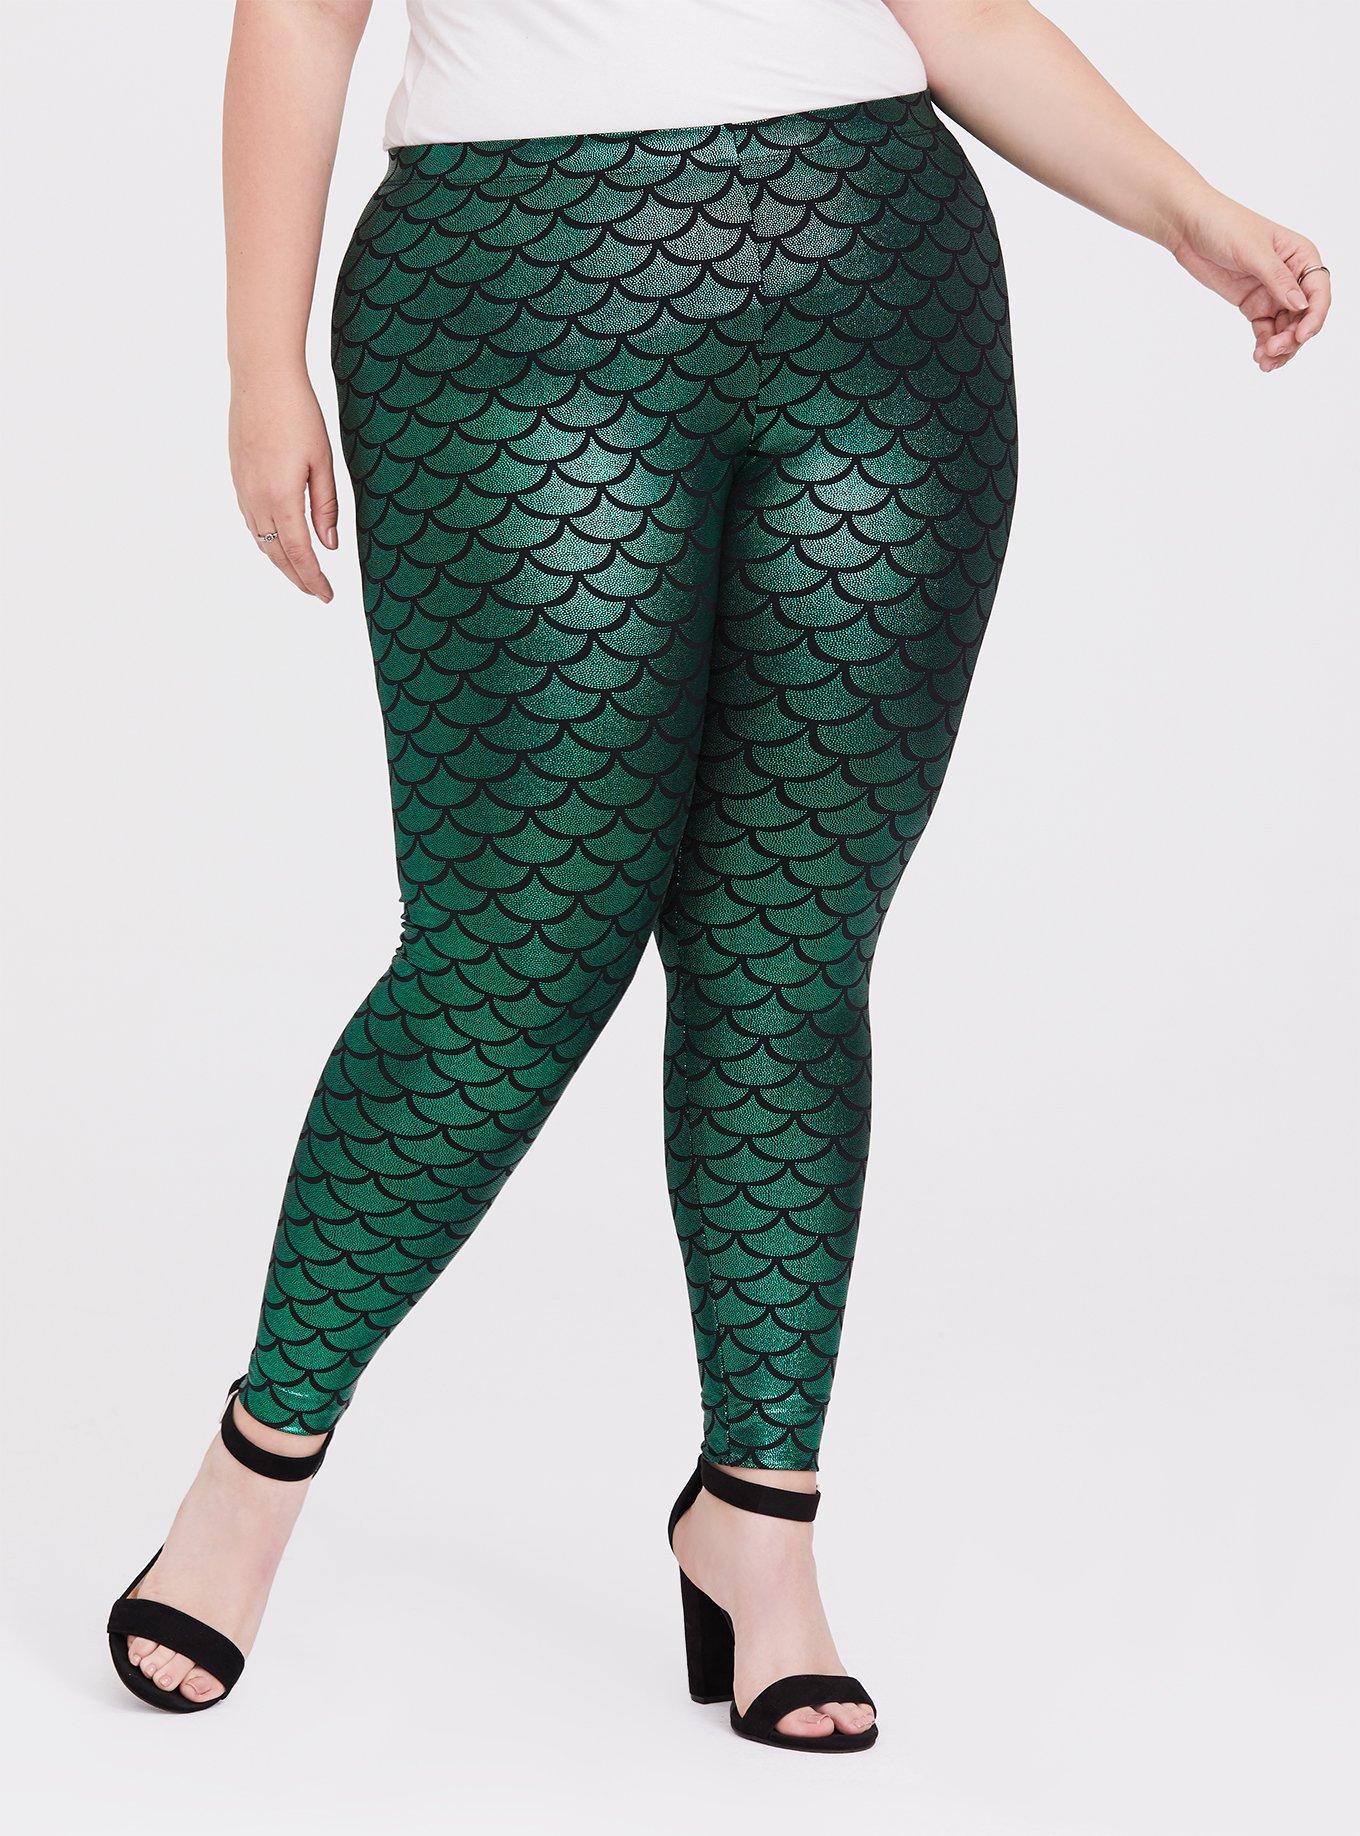 Lotus Leggings Mermaid Fish Green Metallic Athleisure Yoga Pants